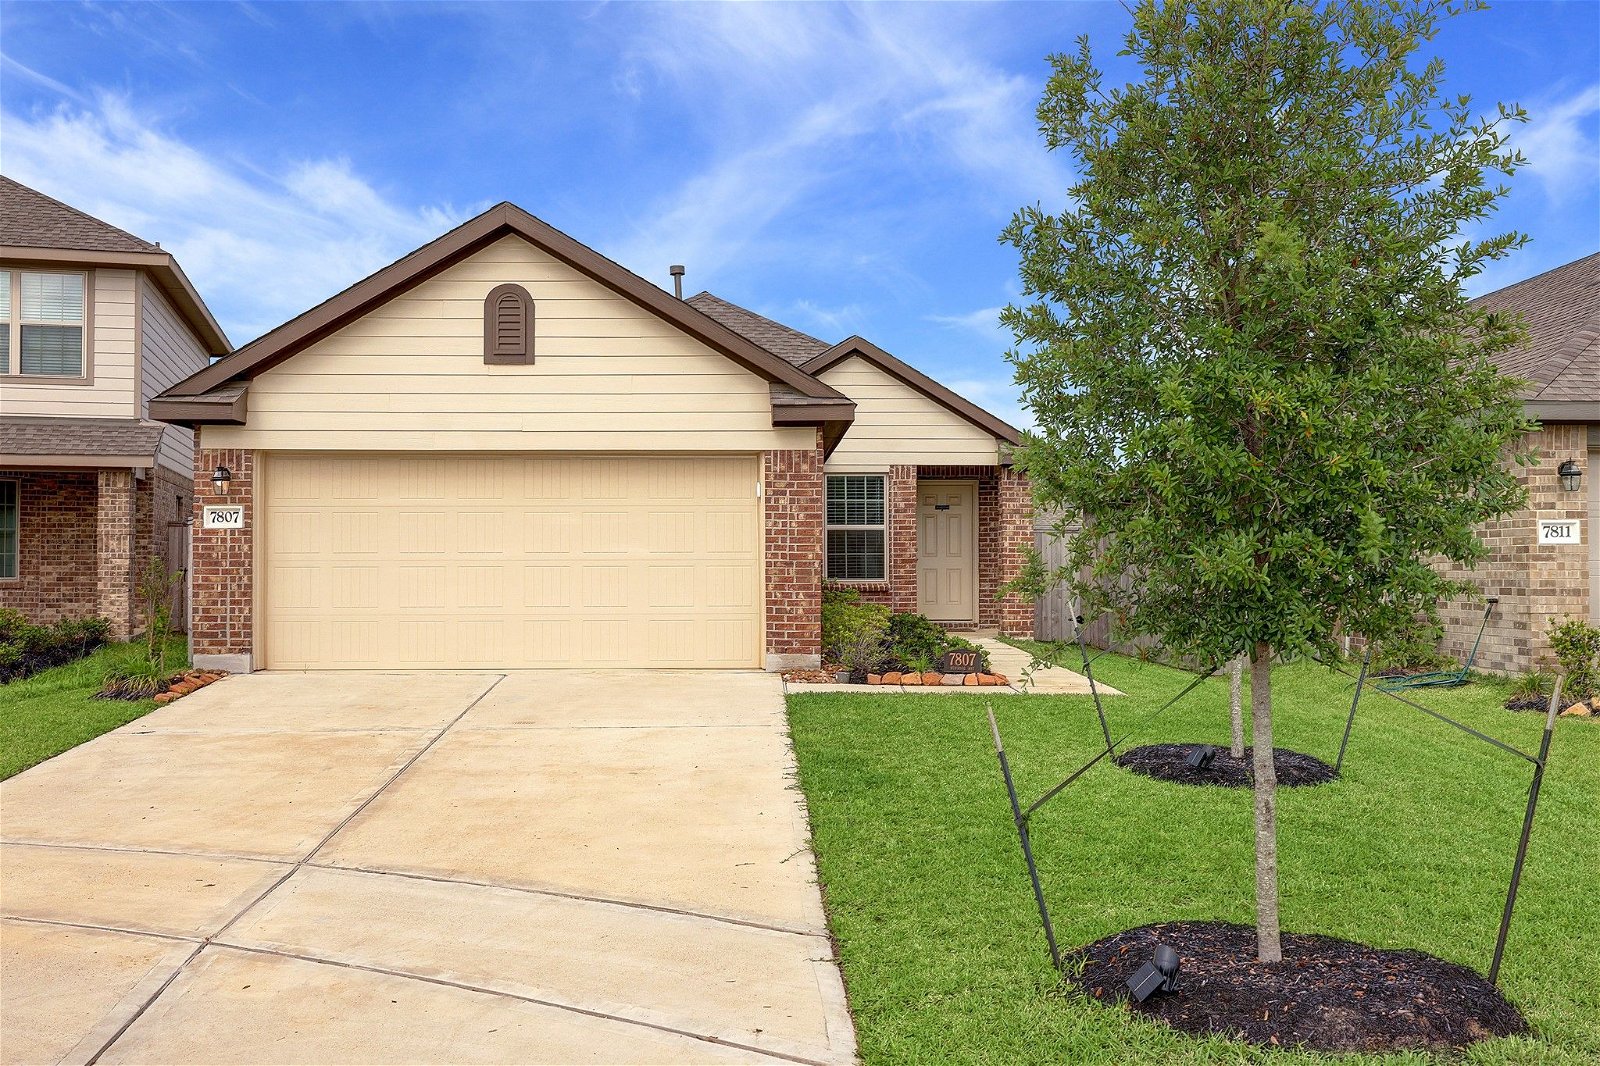 Real estate property located at 7807 Winward Ridge, Harris, Katy, TX, US